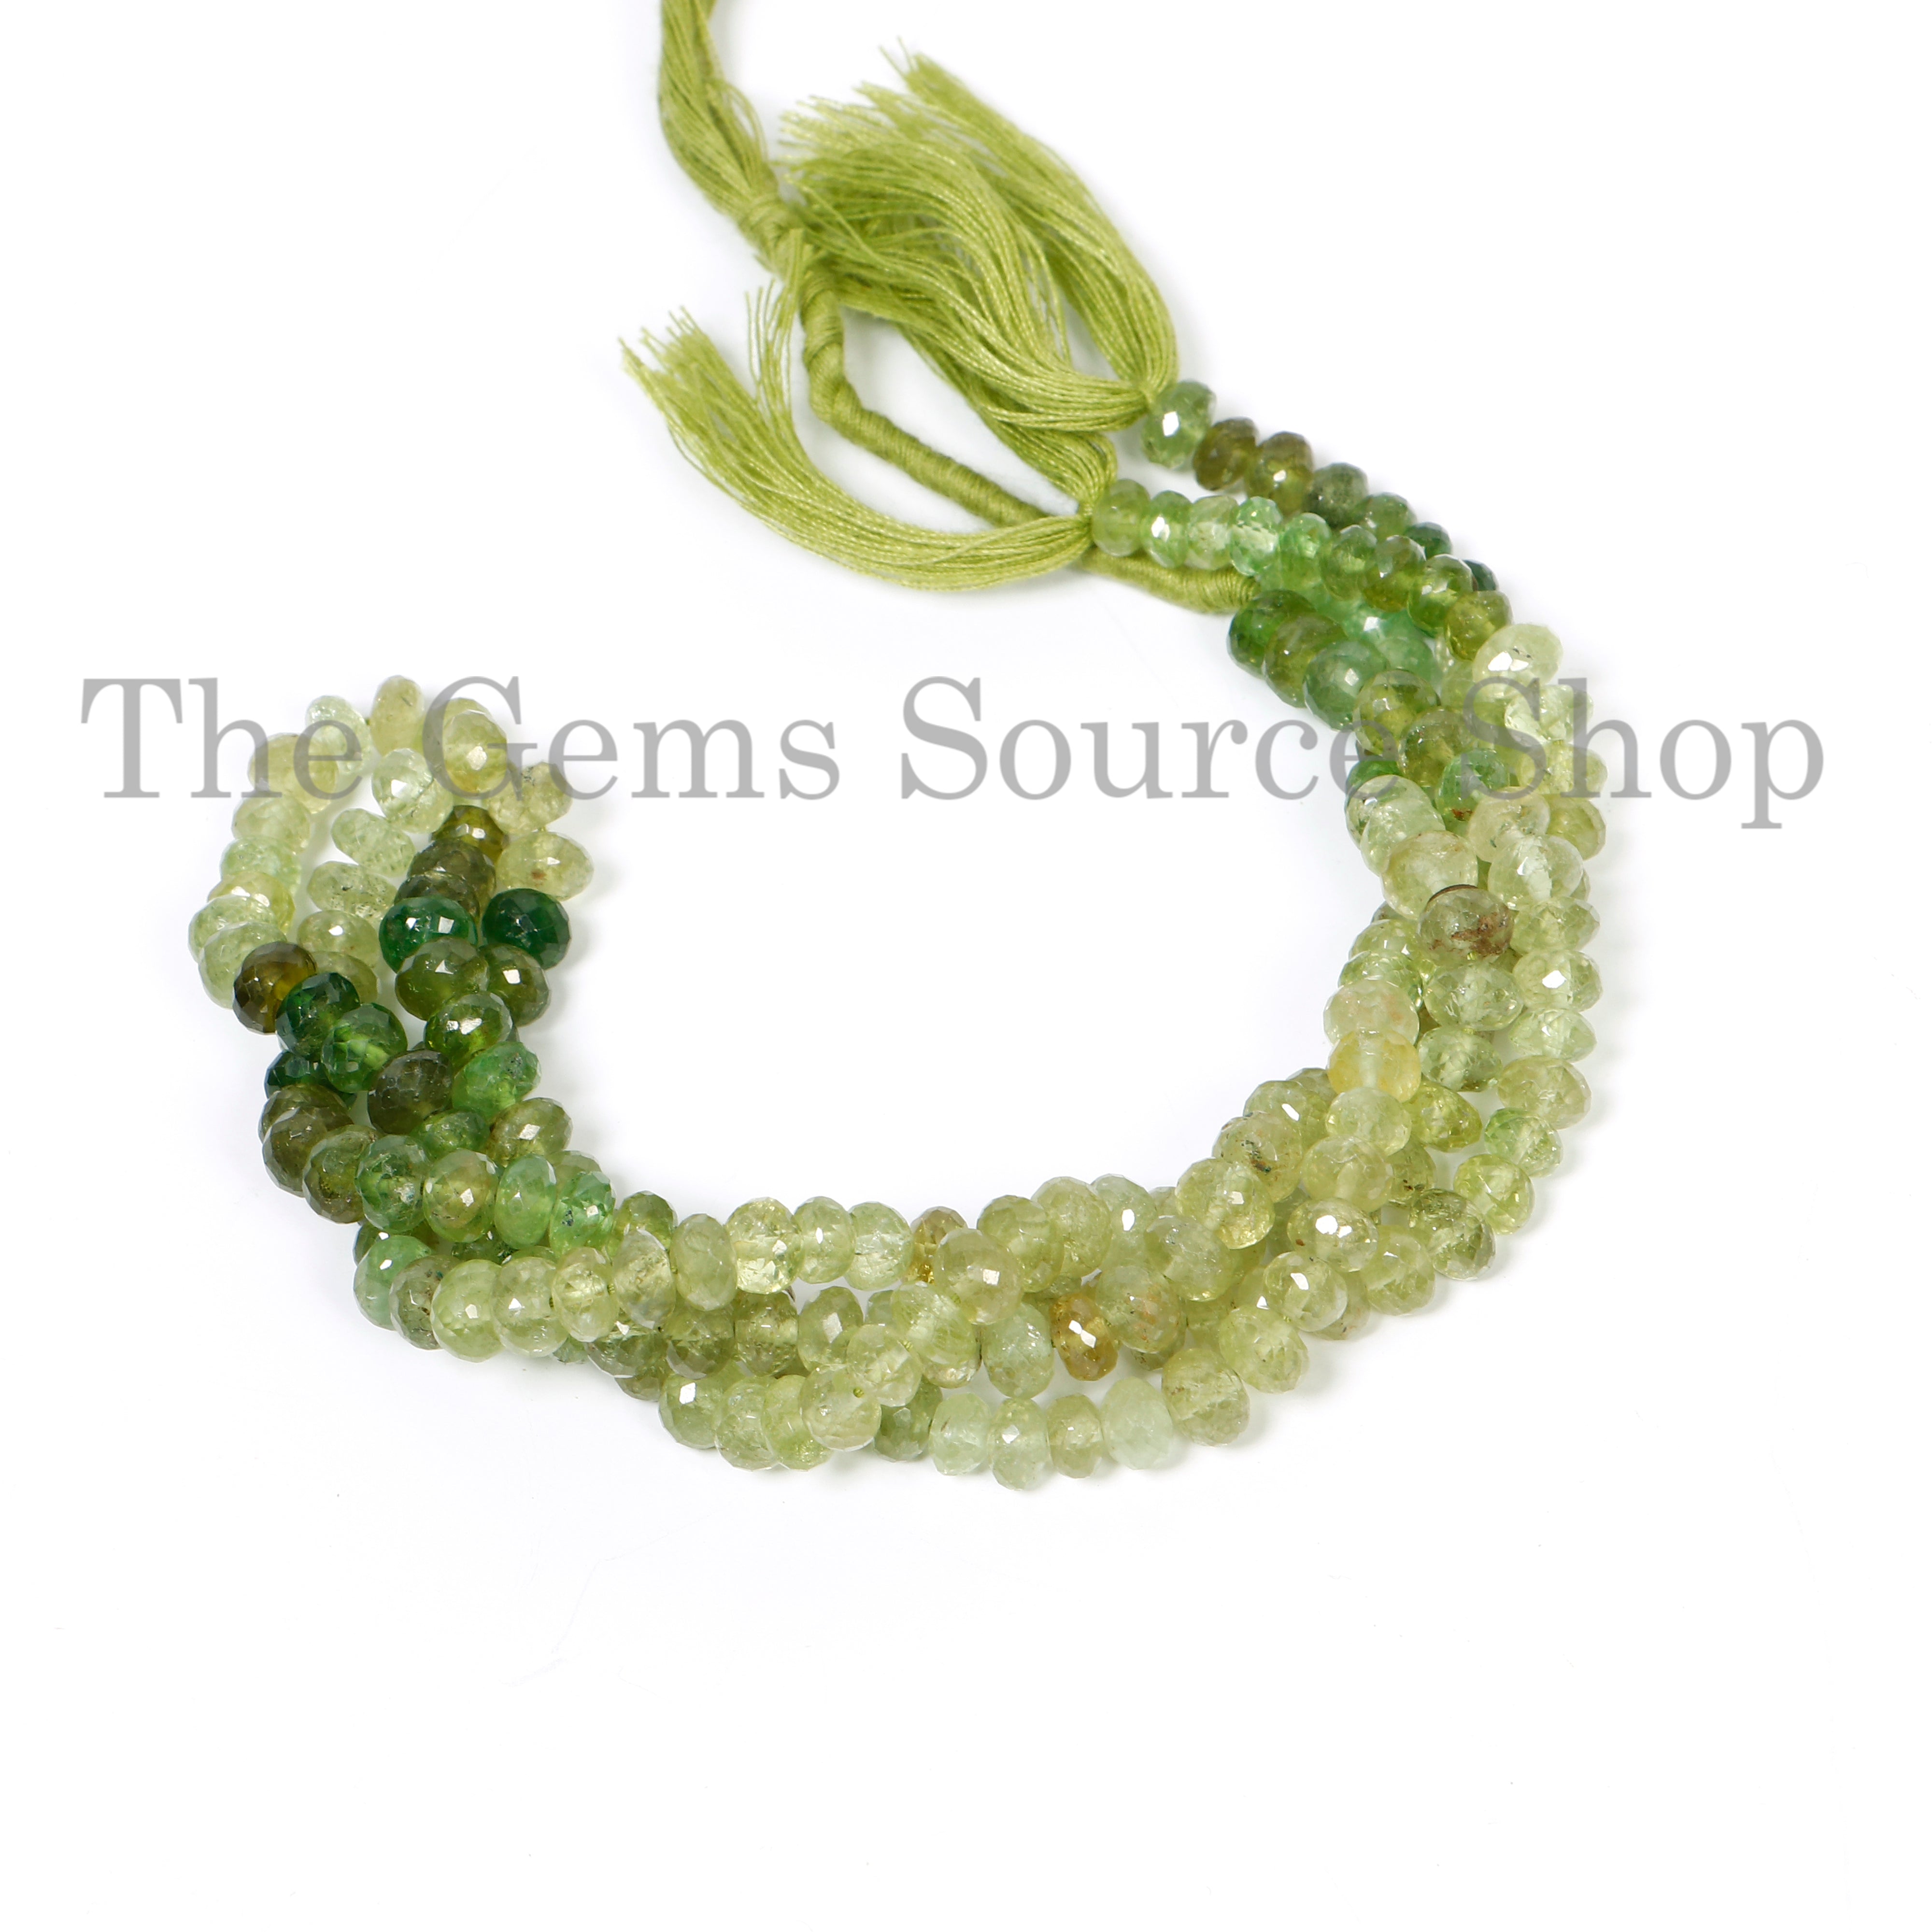 Grossular Garnet Beads, Garnet Rondelle Beads, Garnet Faceted Beads, Garnet Gemstone Beads